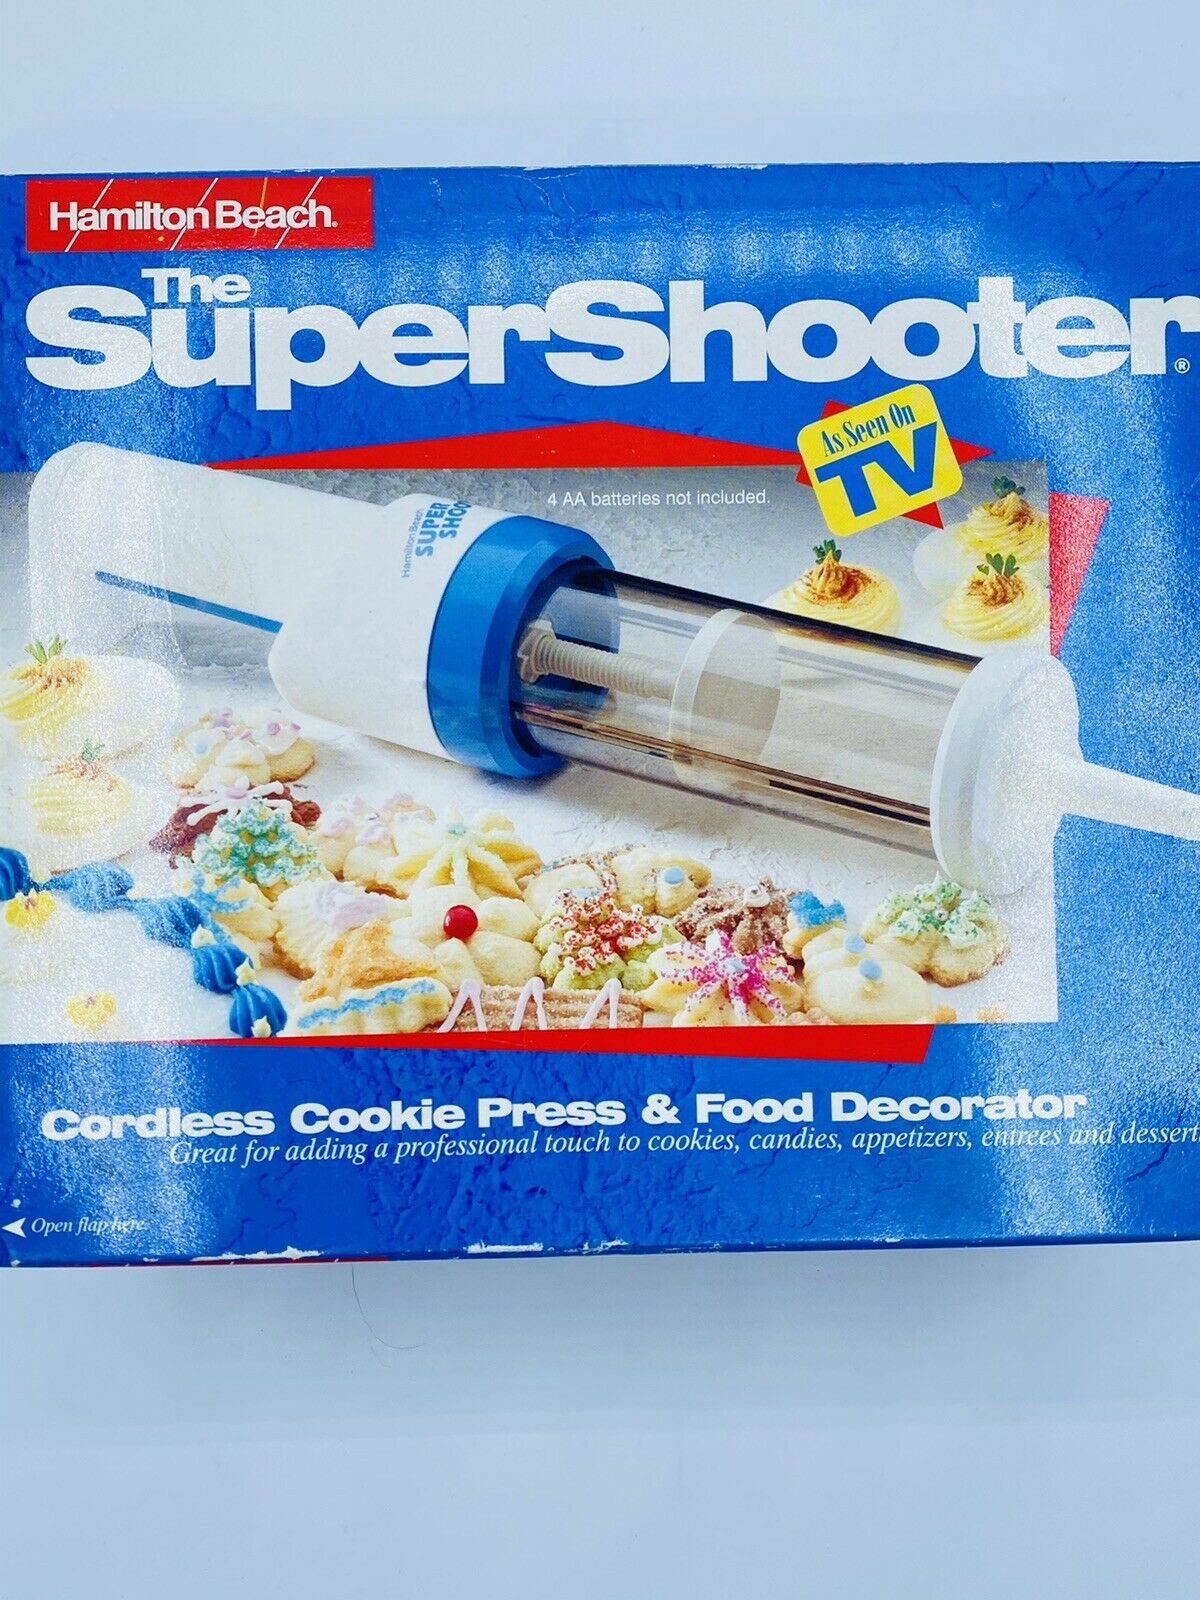 Hamilton Beach Super Shooter Electric Cookie Press Cordless Decorator Clean